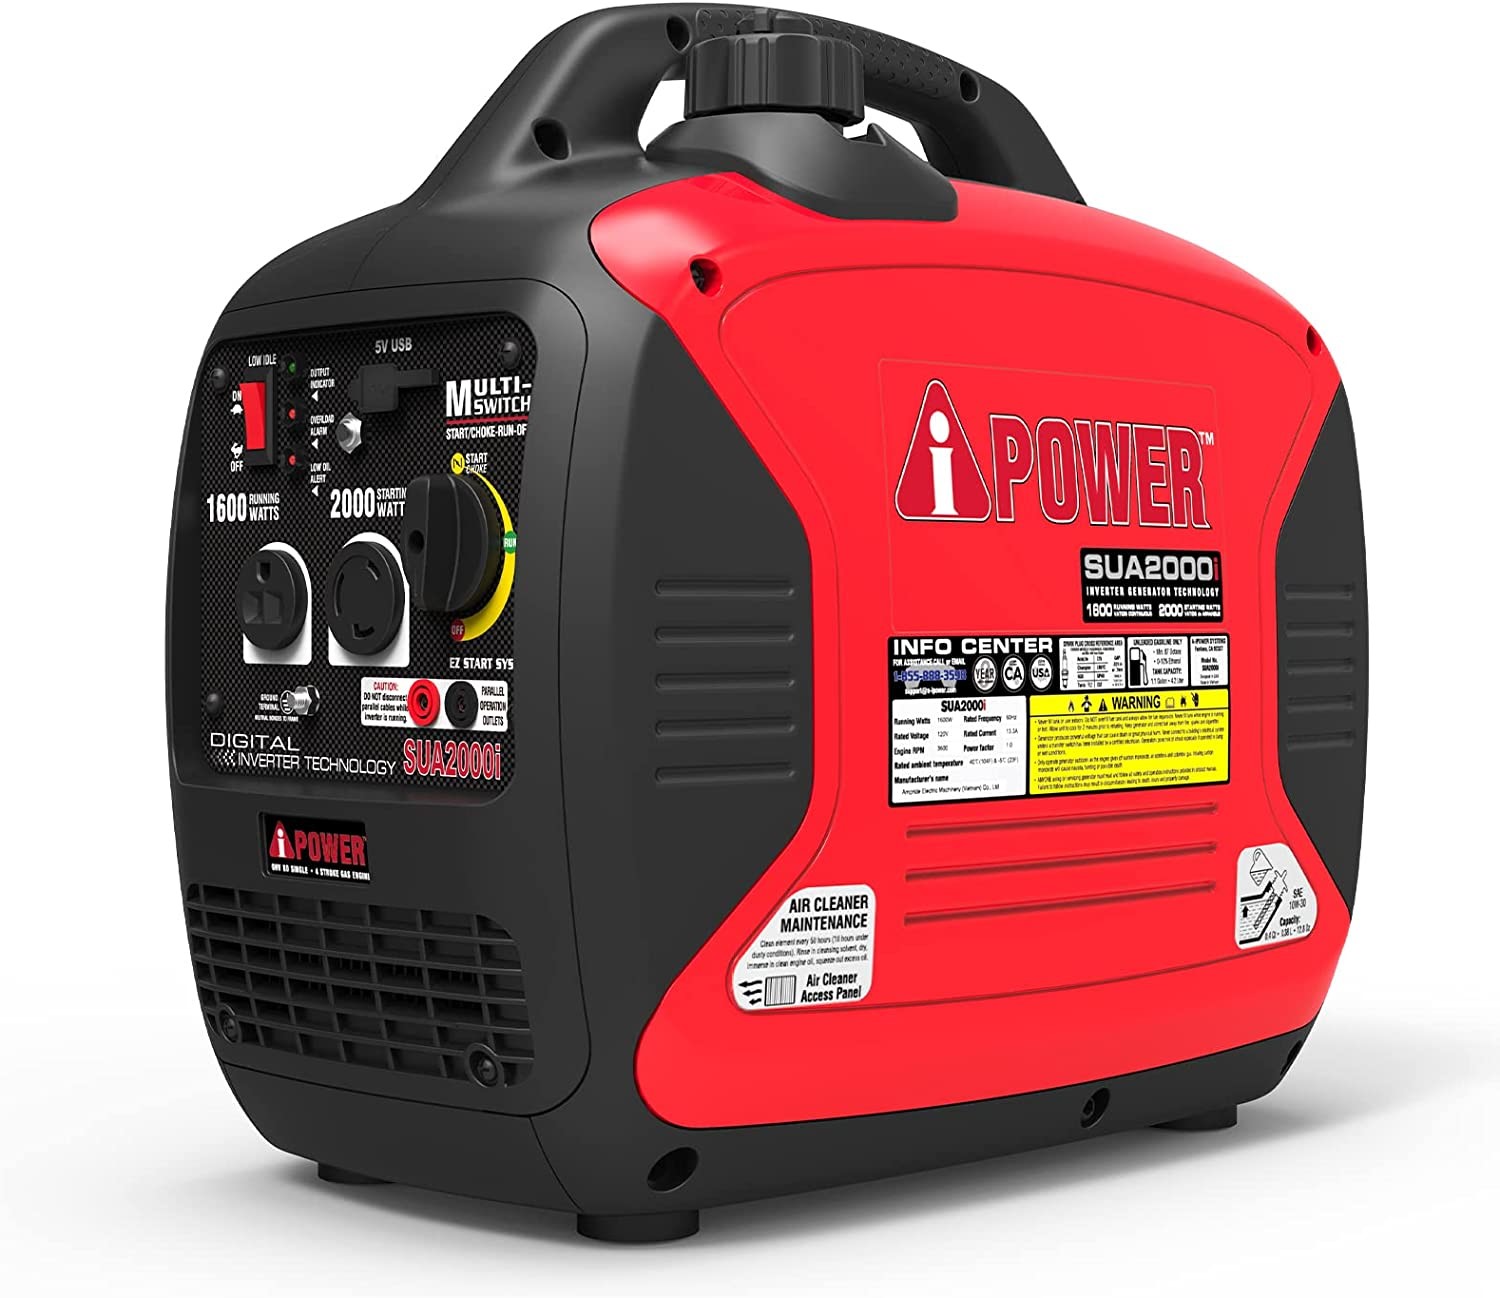 A-iPower Portable Inverter Generator